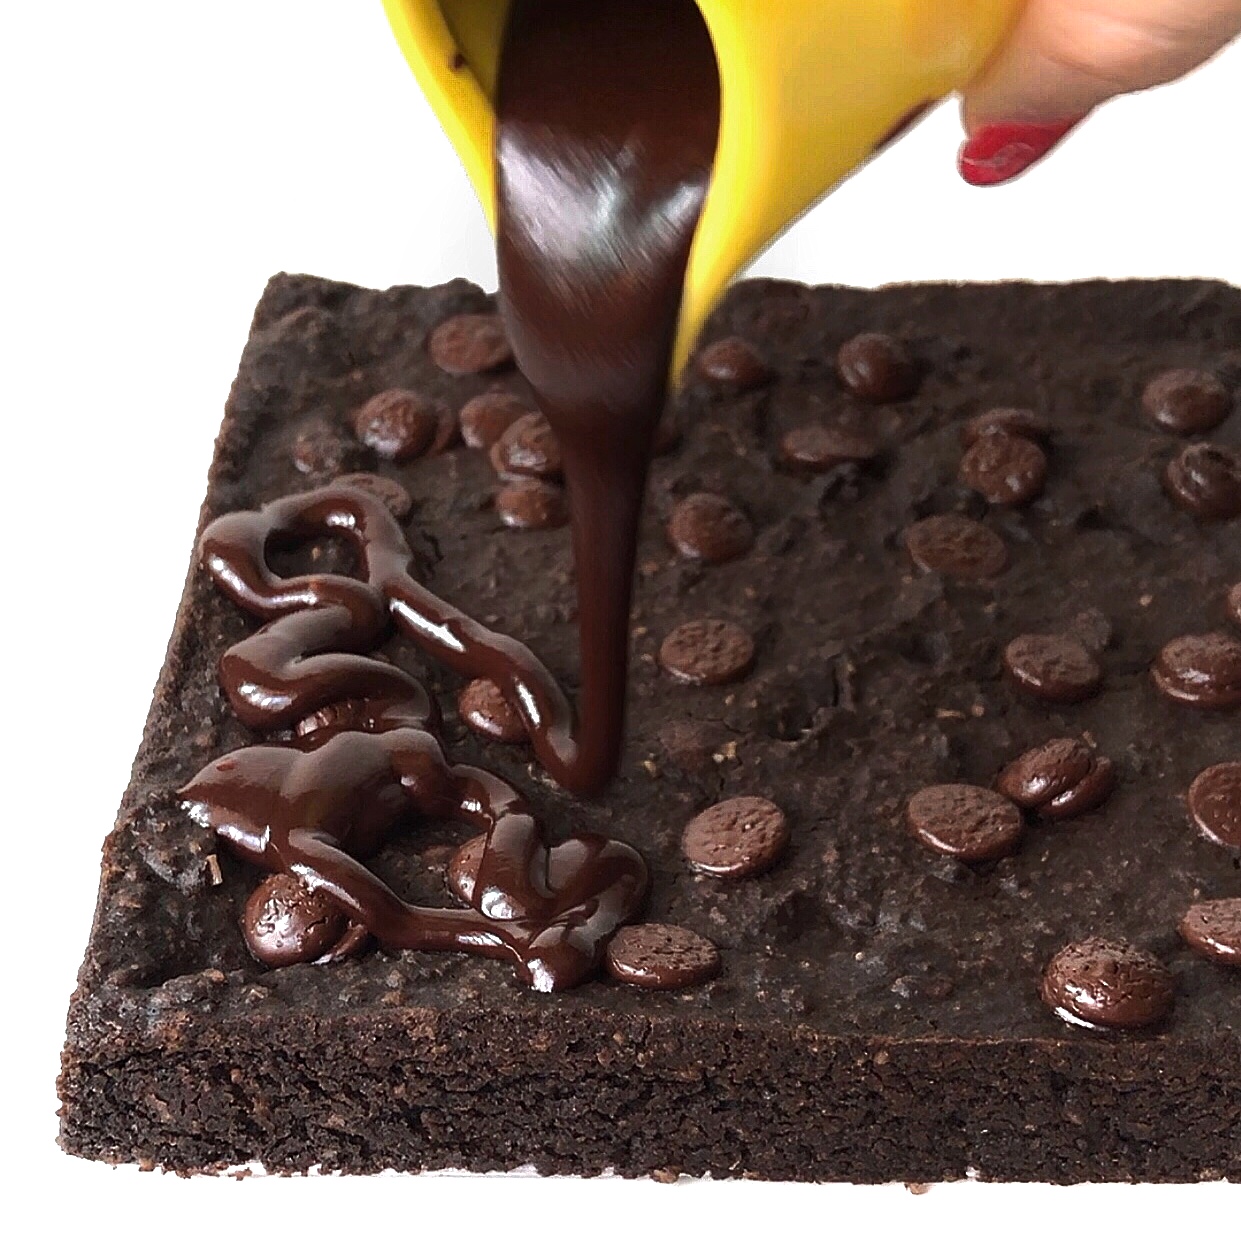 Adding Chocolate ganache to brownies